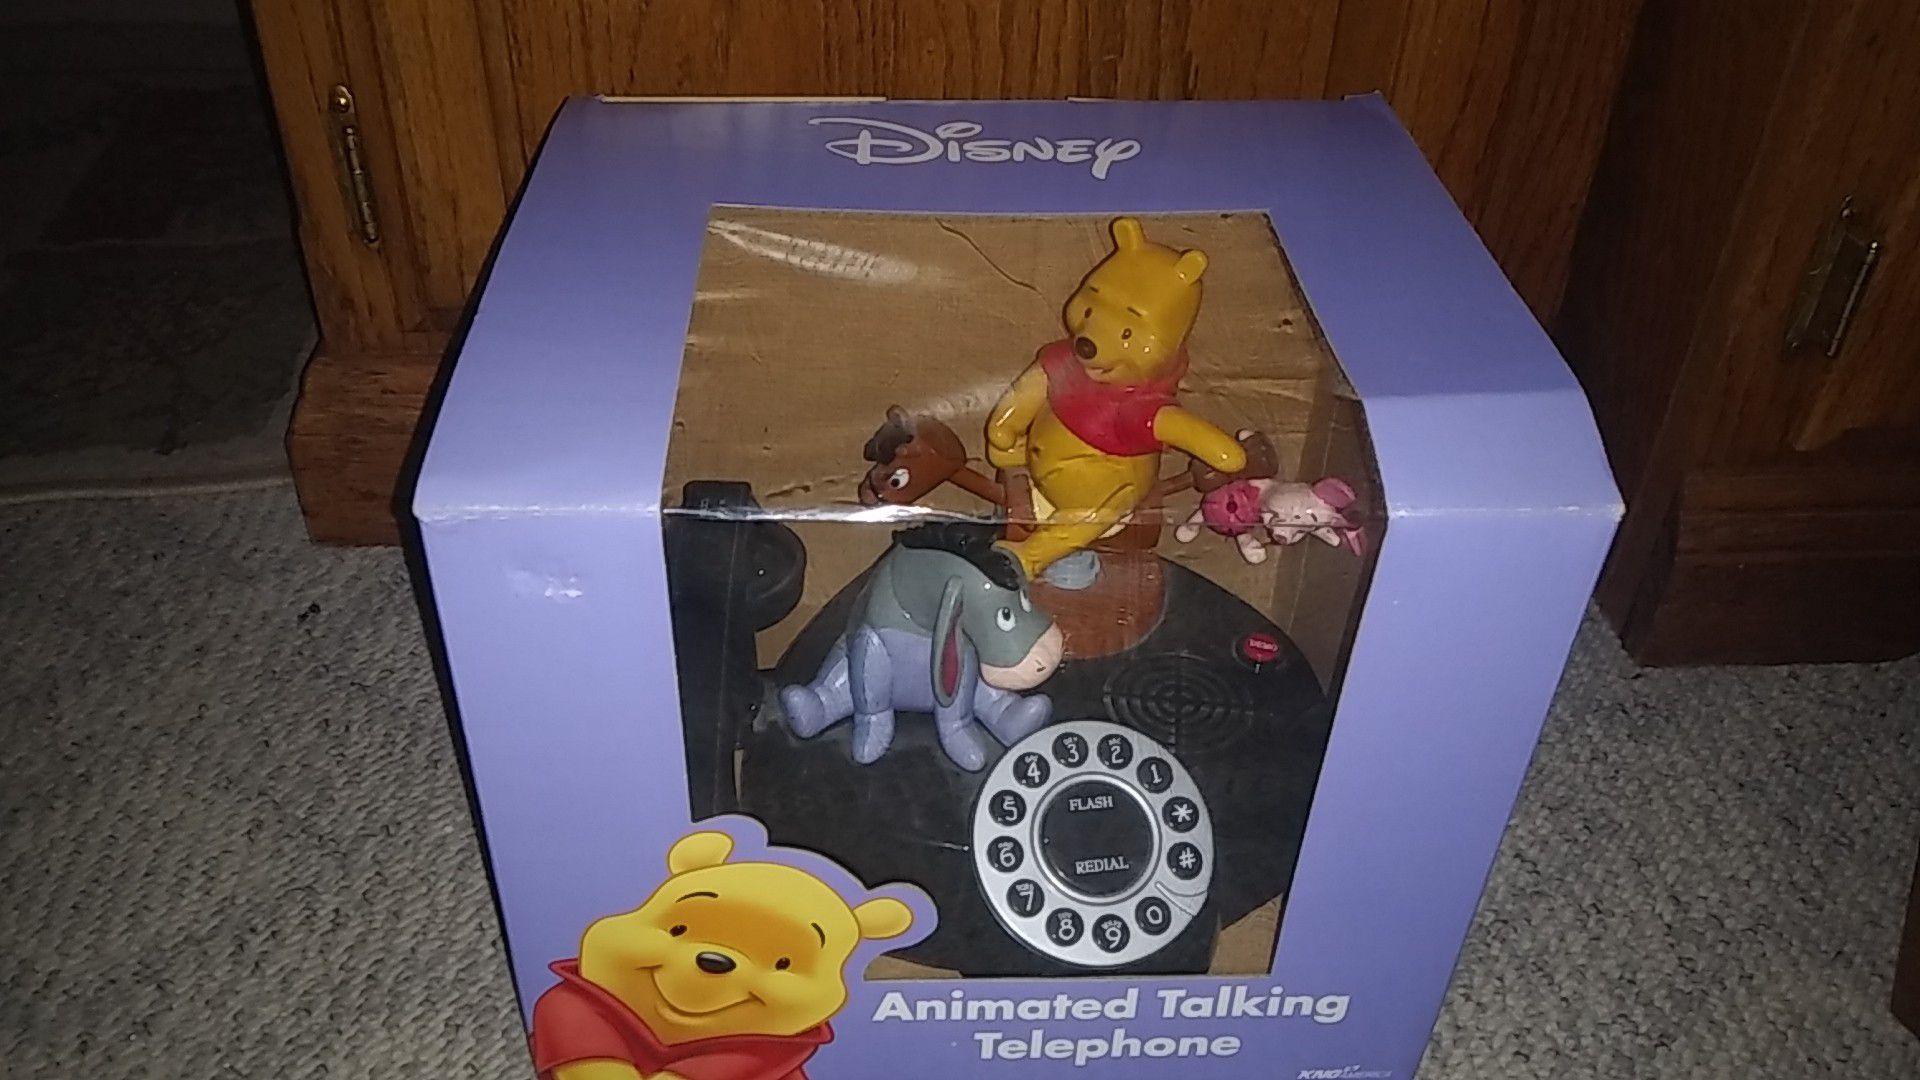 Disney winne the pooh phone